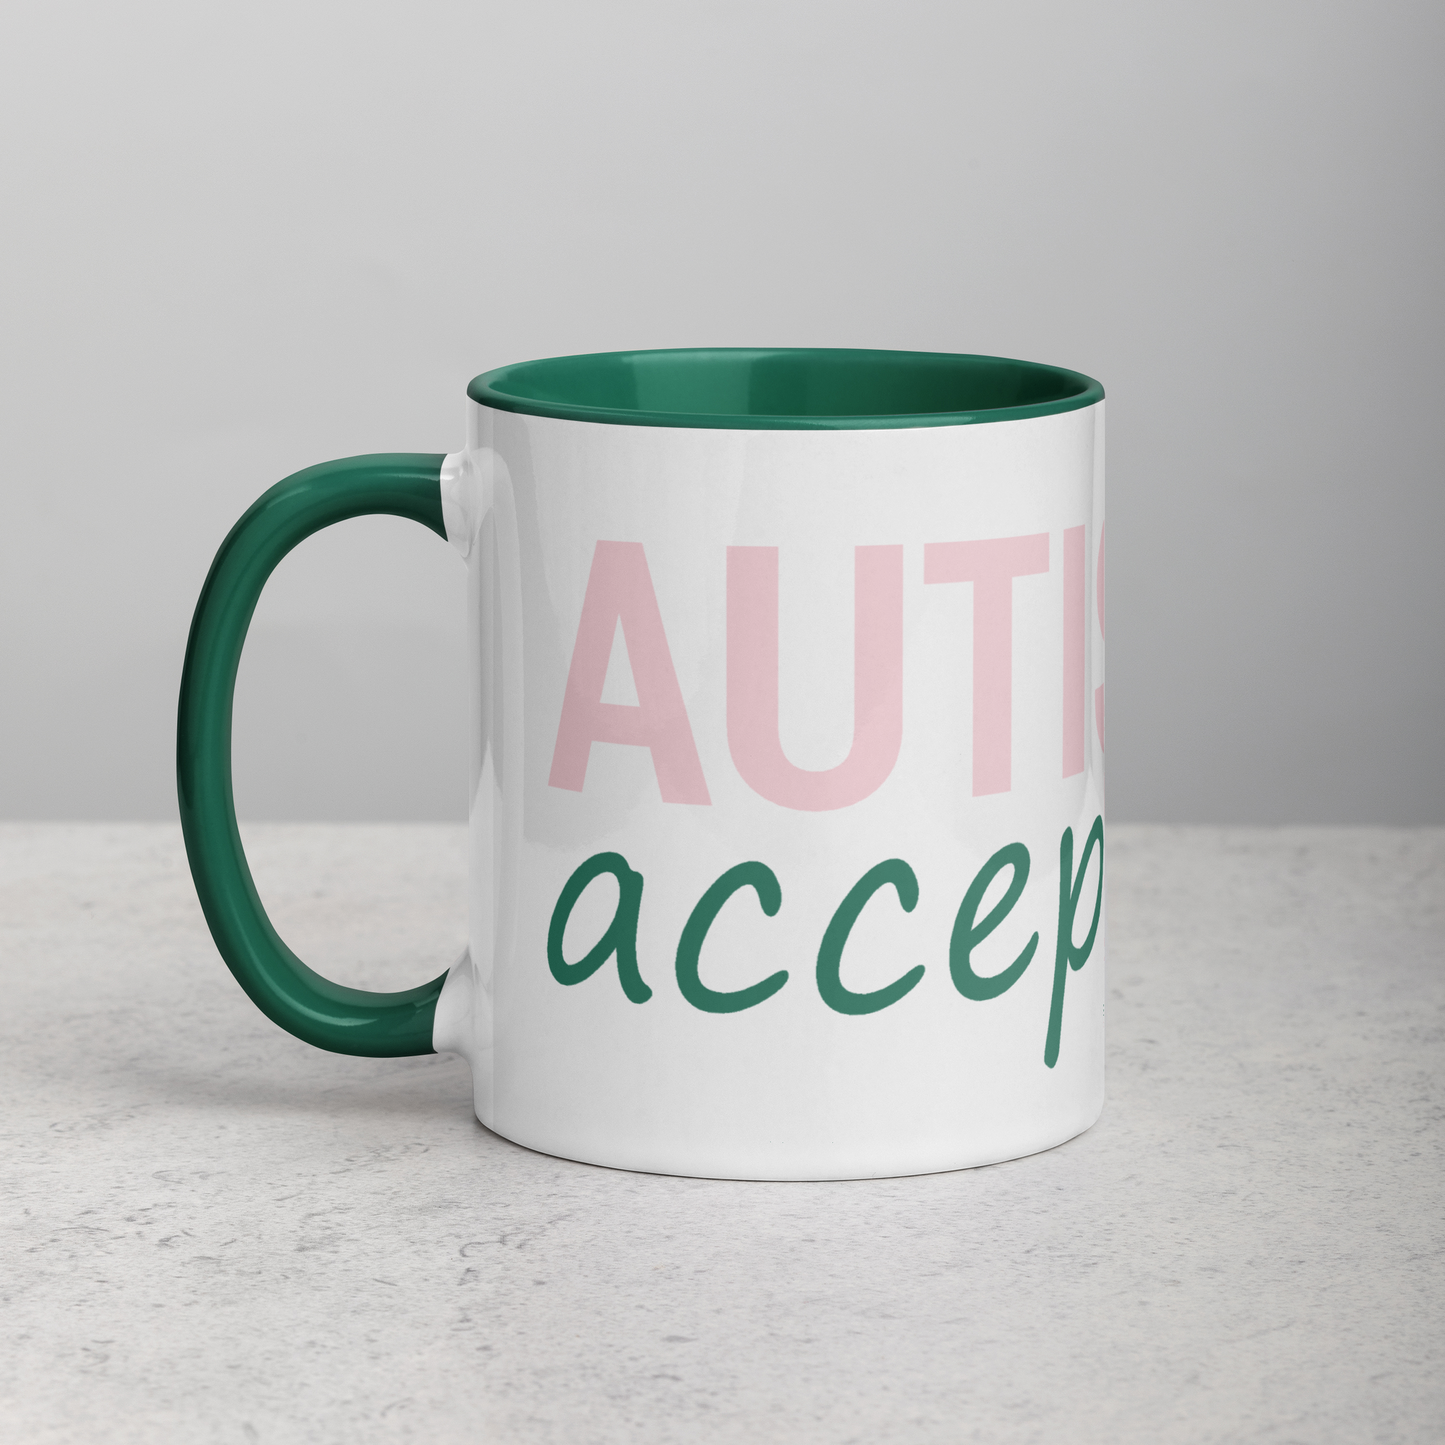 Autism Acceptance Mug (Green)